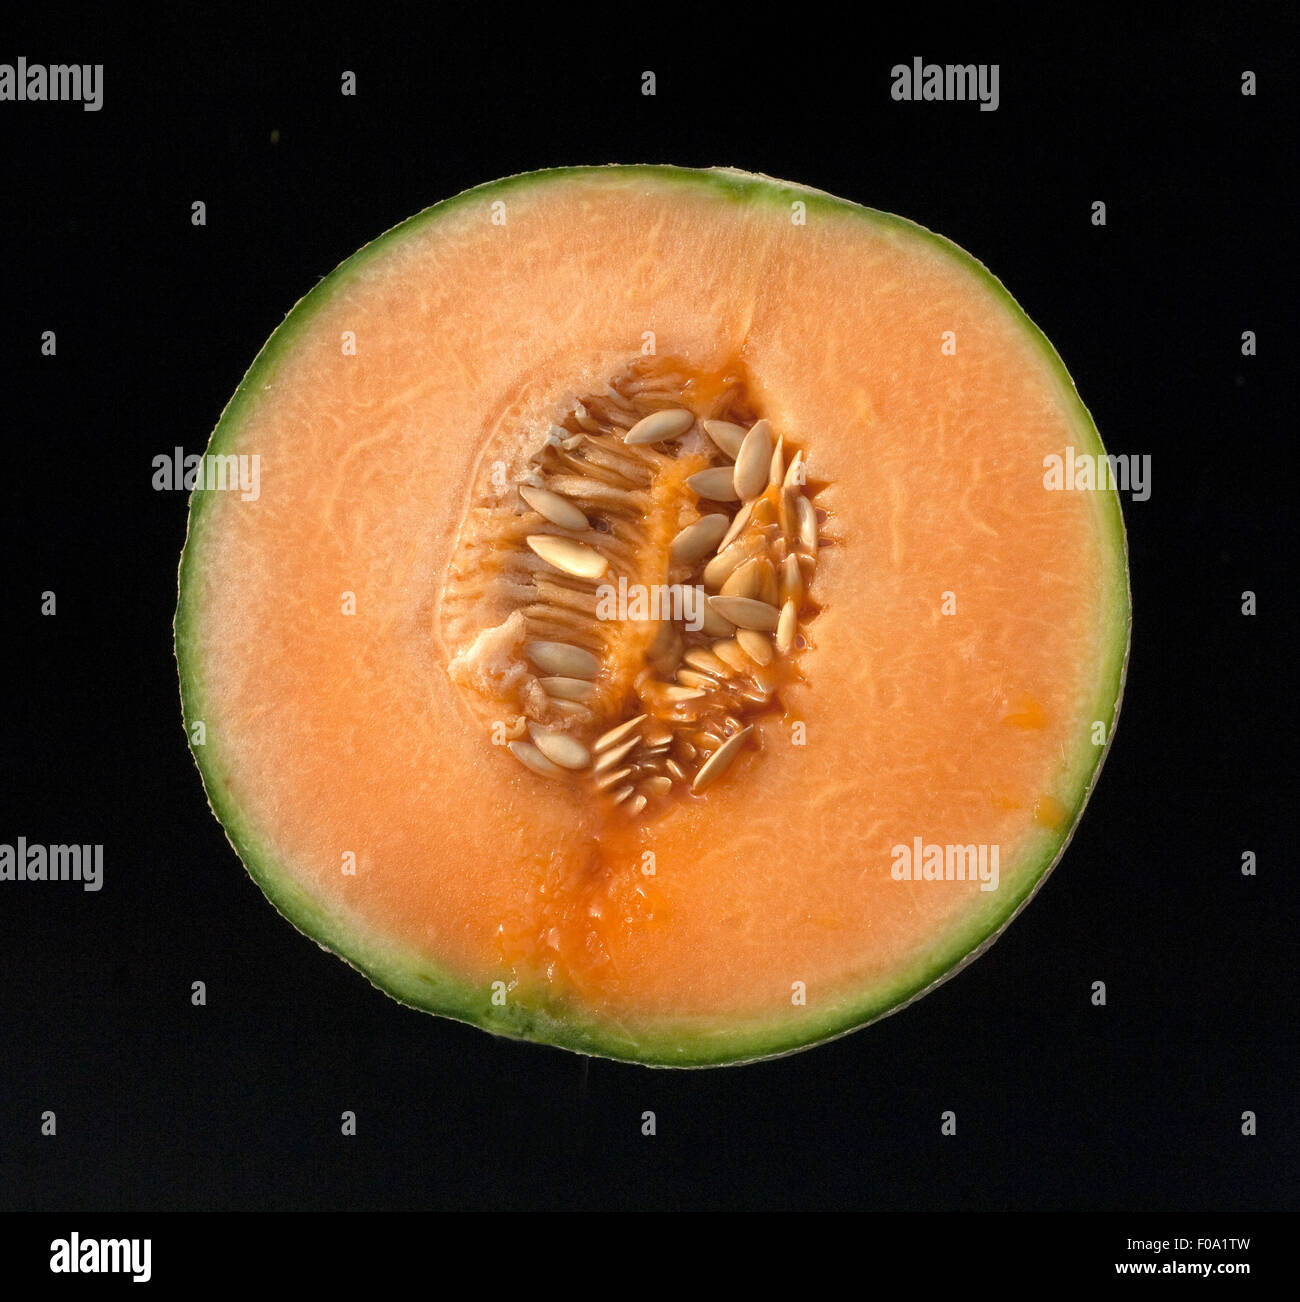 Cantaloupe-Melone, Cucumis melo var. cantalupensis, Stock Photo